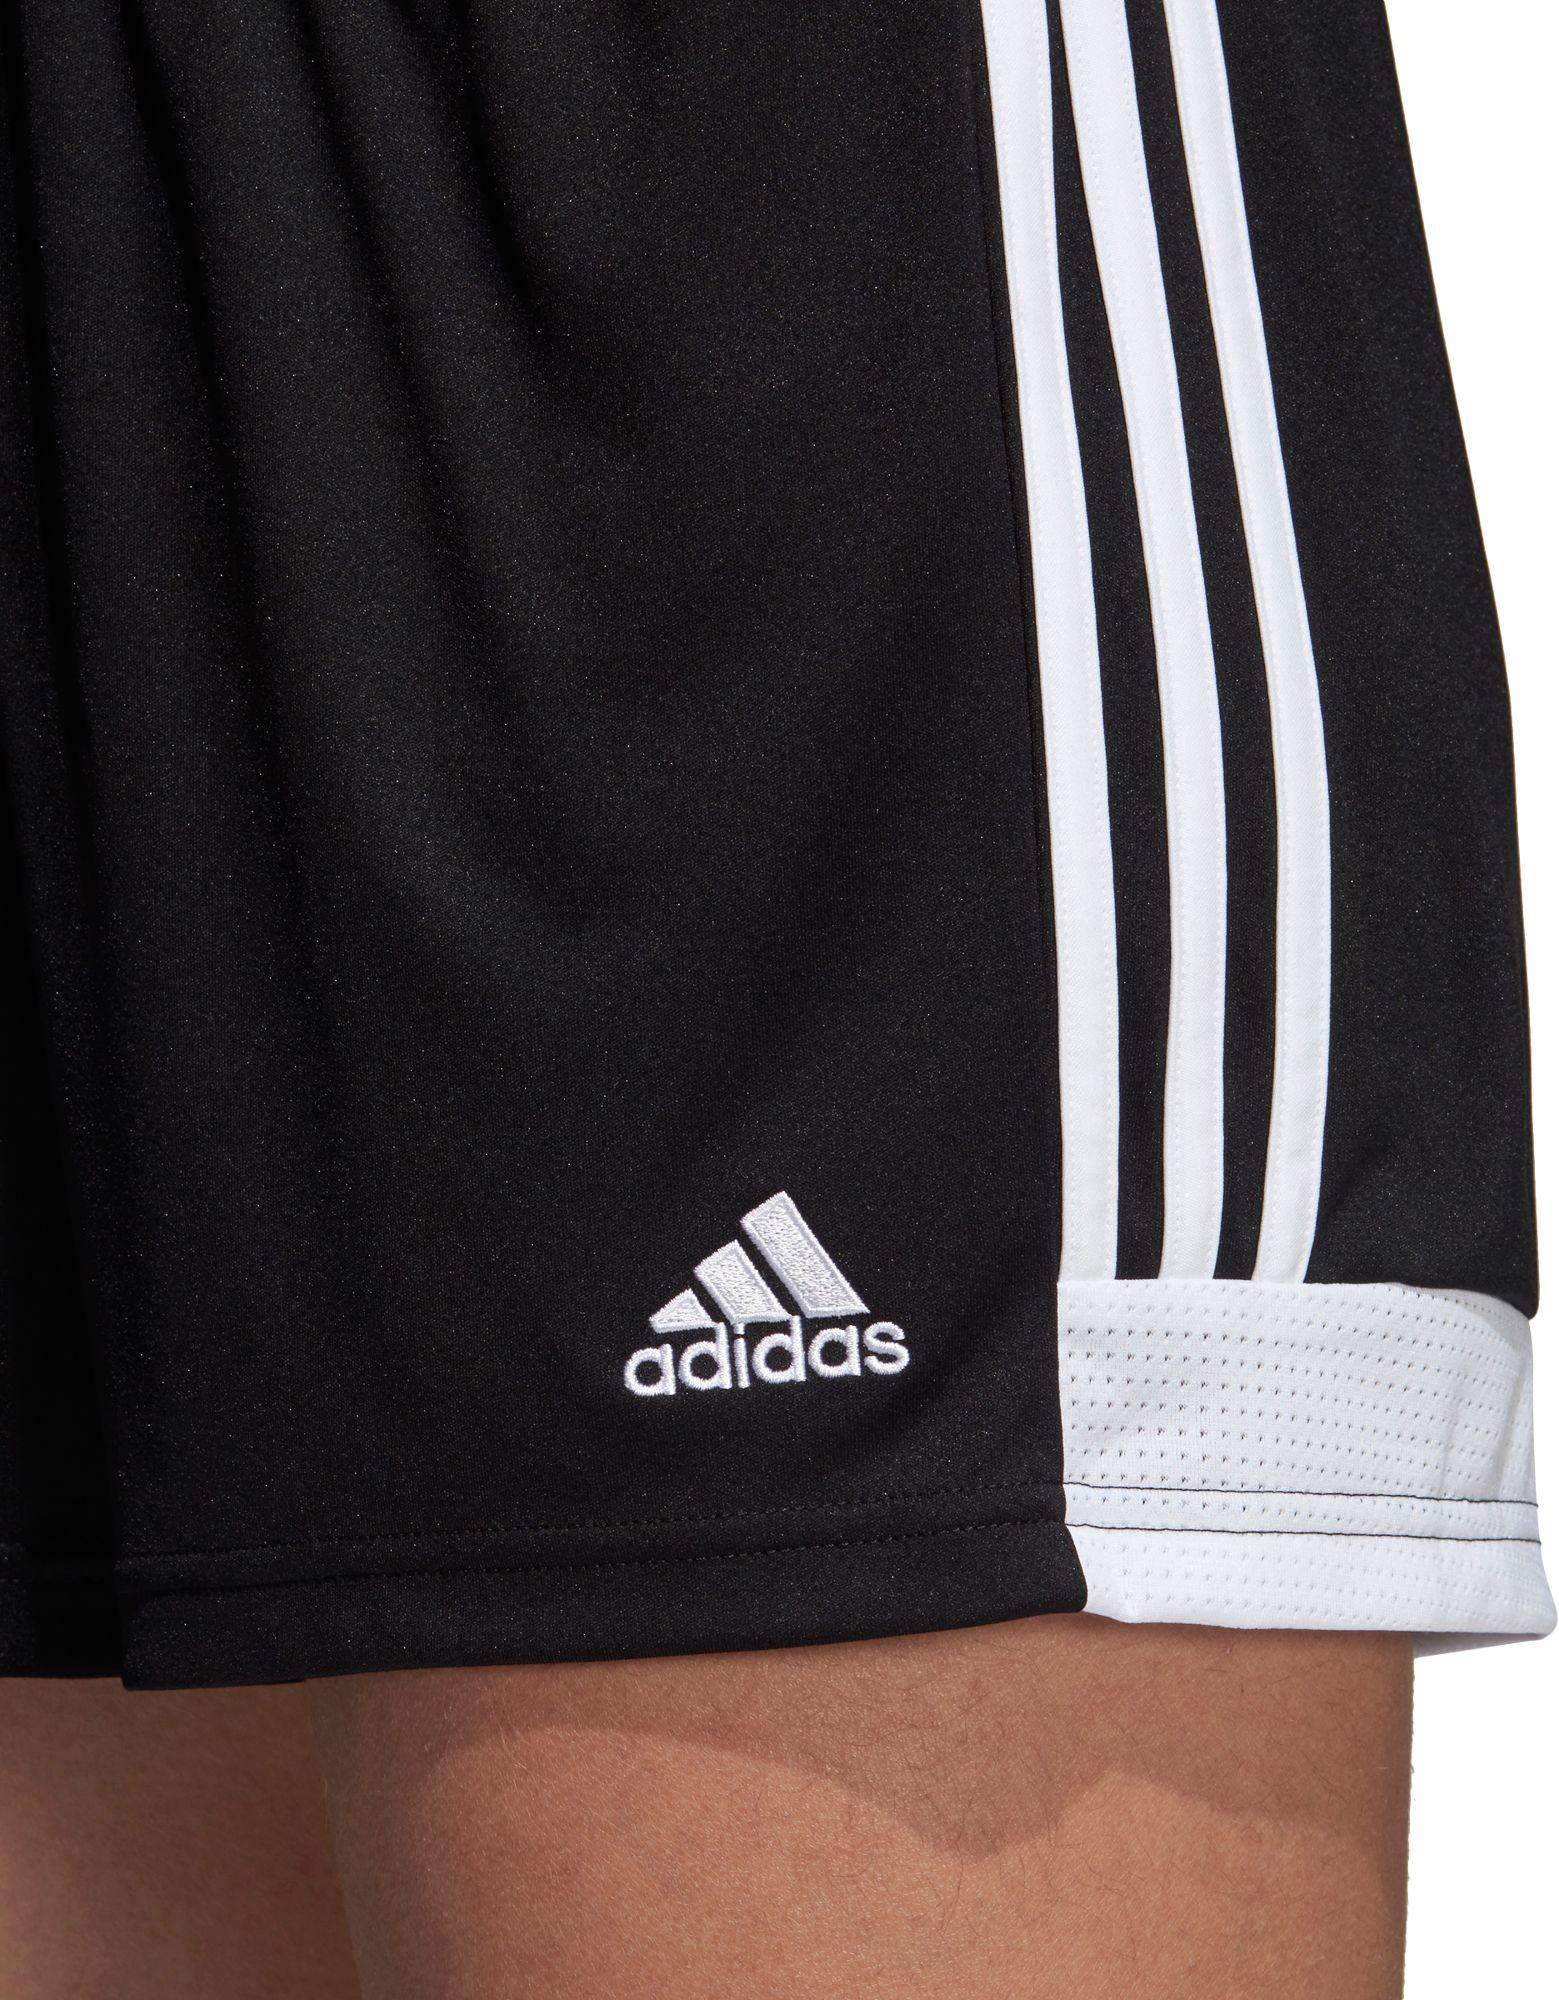 adidas Synthetic Tastigo 19 Soccer Shorts in Black/White (Black) - Lyst